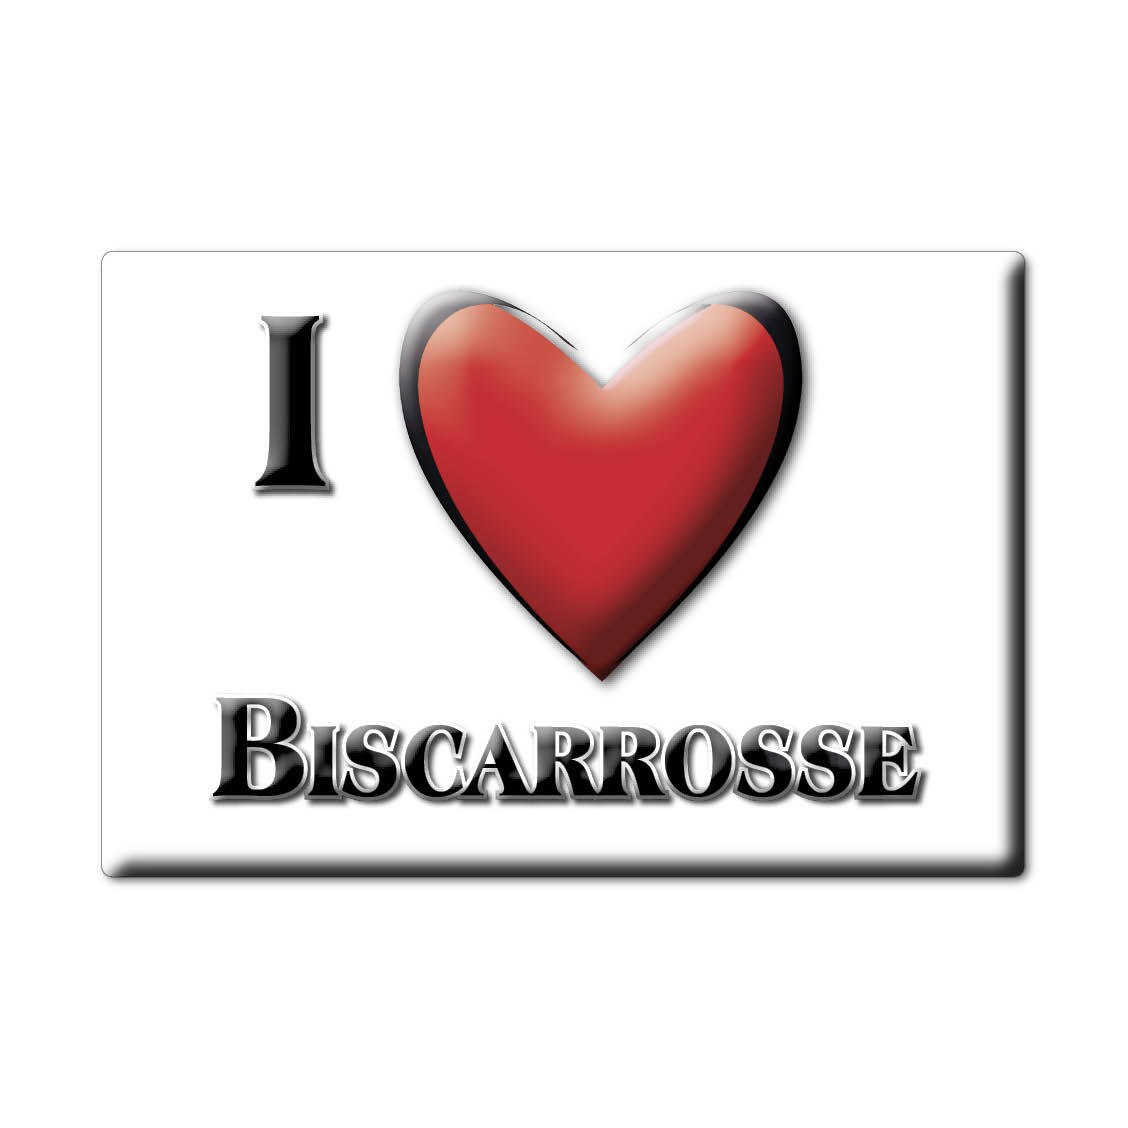 Biscarrosse Magneet Magneet Rhône Alpes (40) Frankrijk Koelkastmagneet Souvenir Ik Liefde